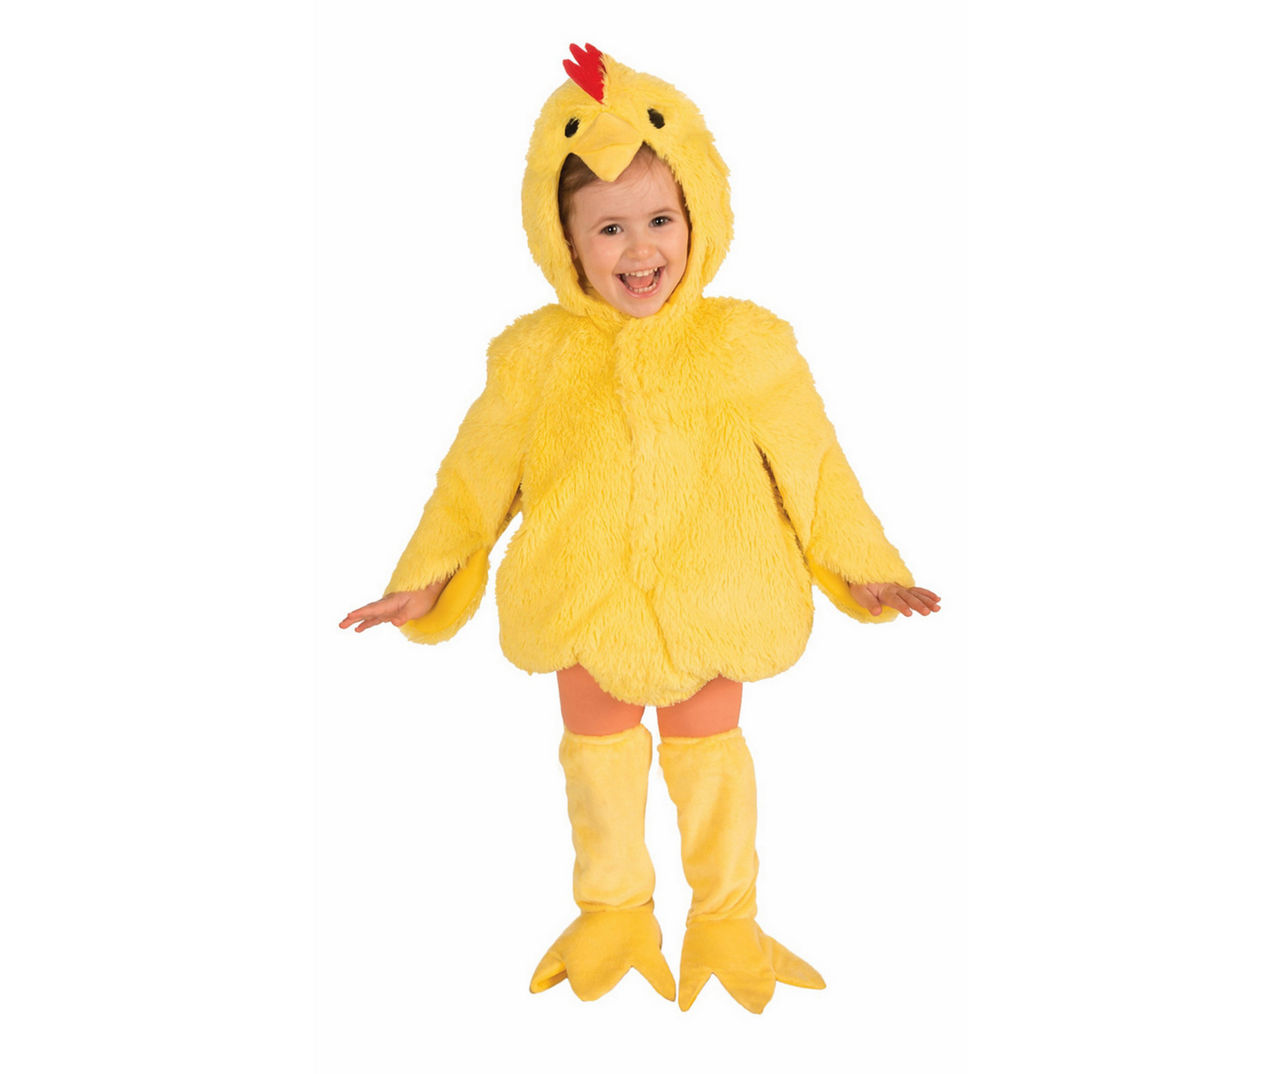 Toddler Size S Plush Chicken Costume